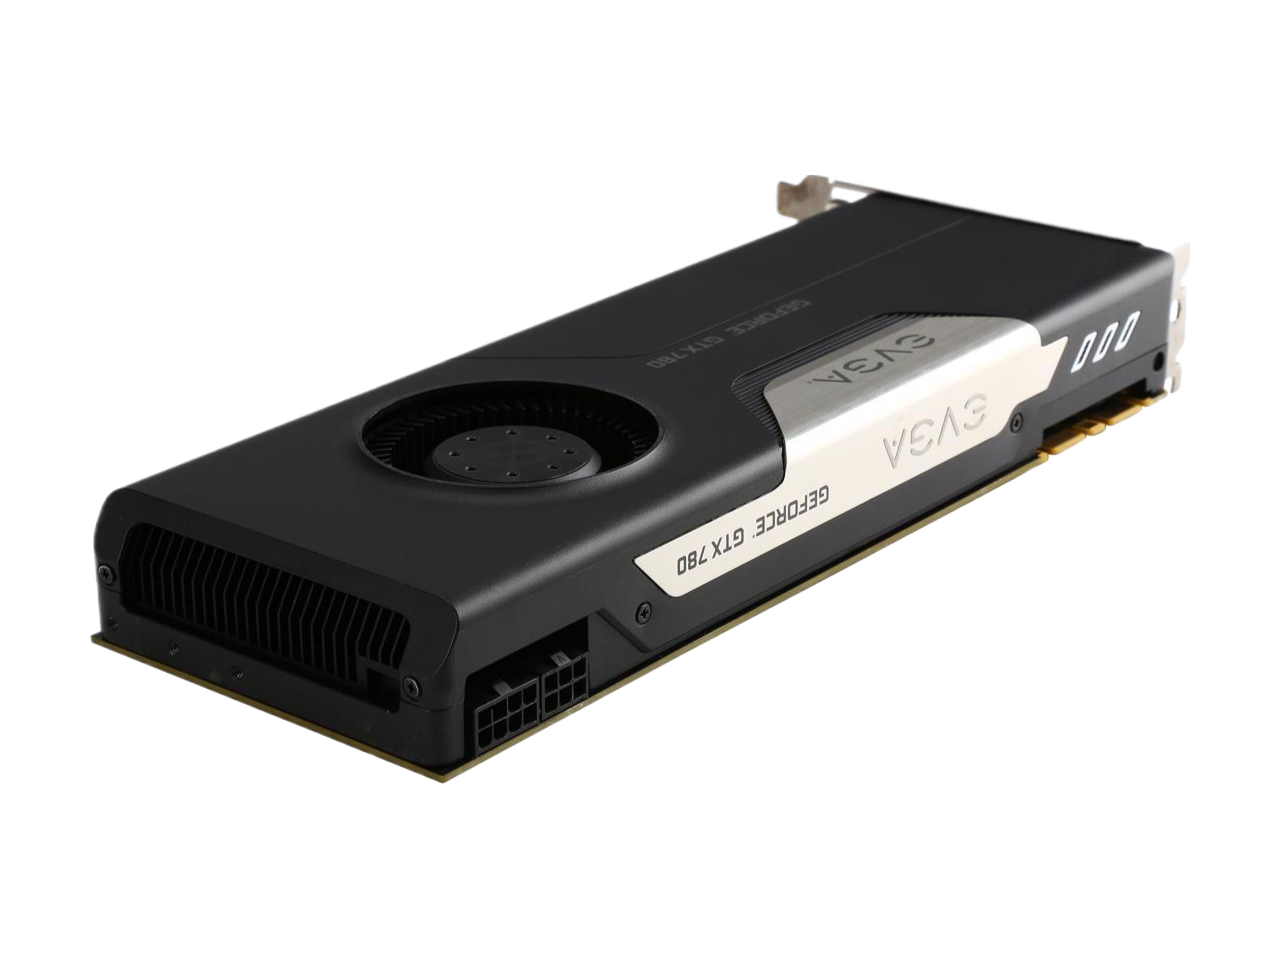 EVGA SuperClocked GeForce GTX 780 3GB 384-Bit GDDR5 PCI Express 3.0 SLI Support Video Card 03G-P4-2785-RX